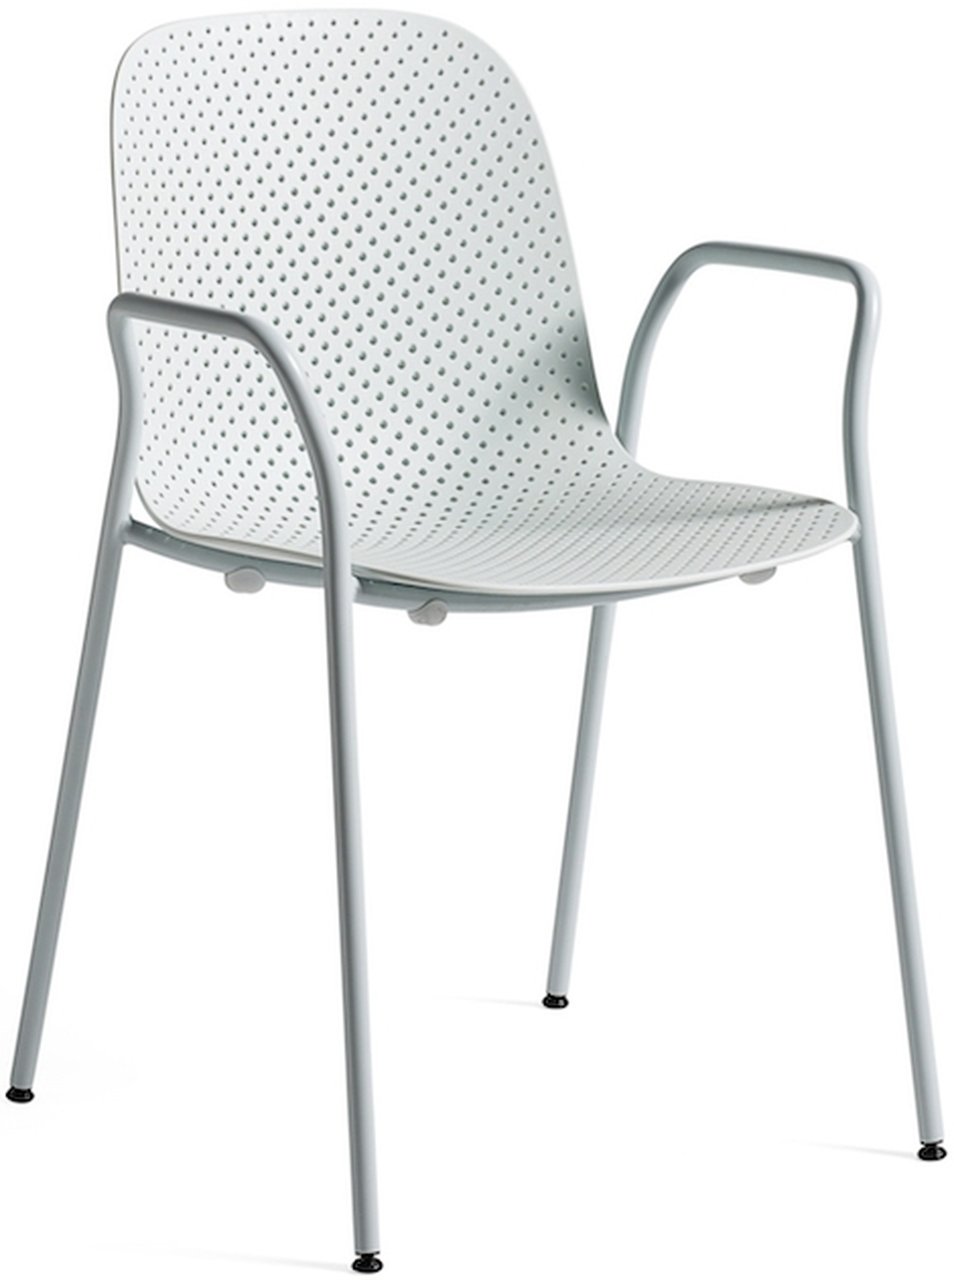 Hay 13Eighty Armchair garden chair mint green show model chair image 1